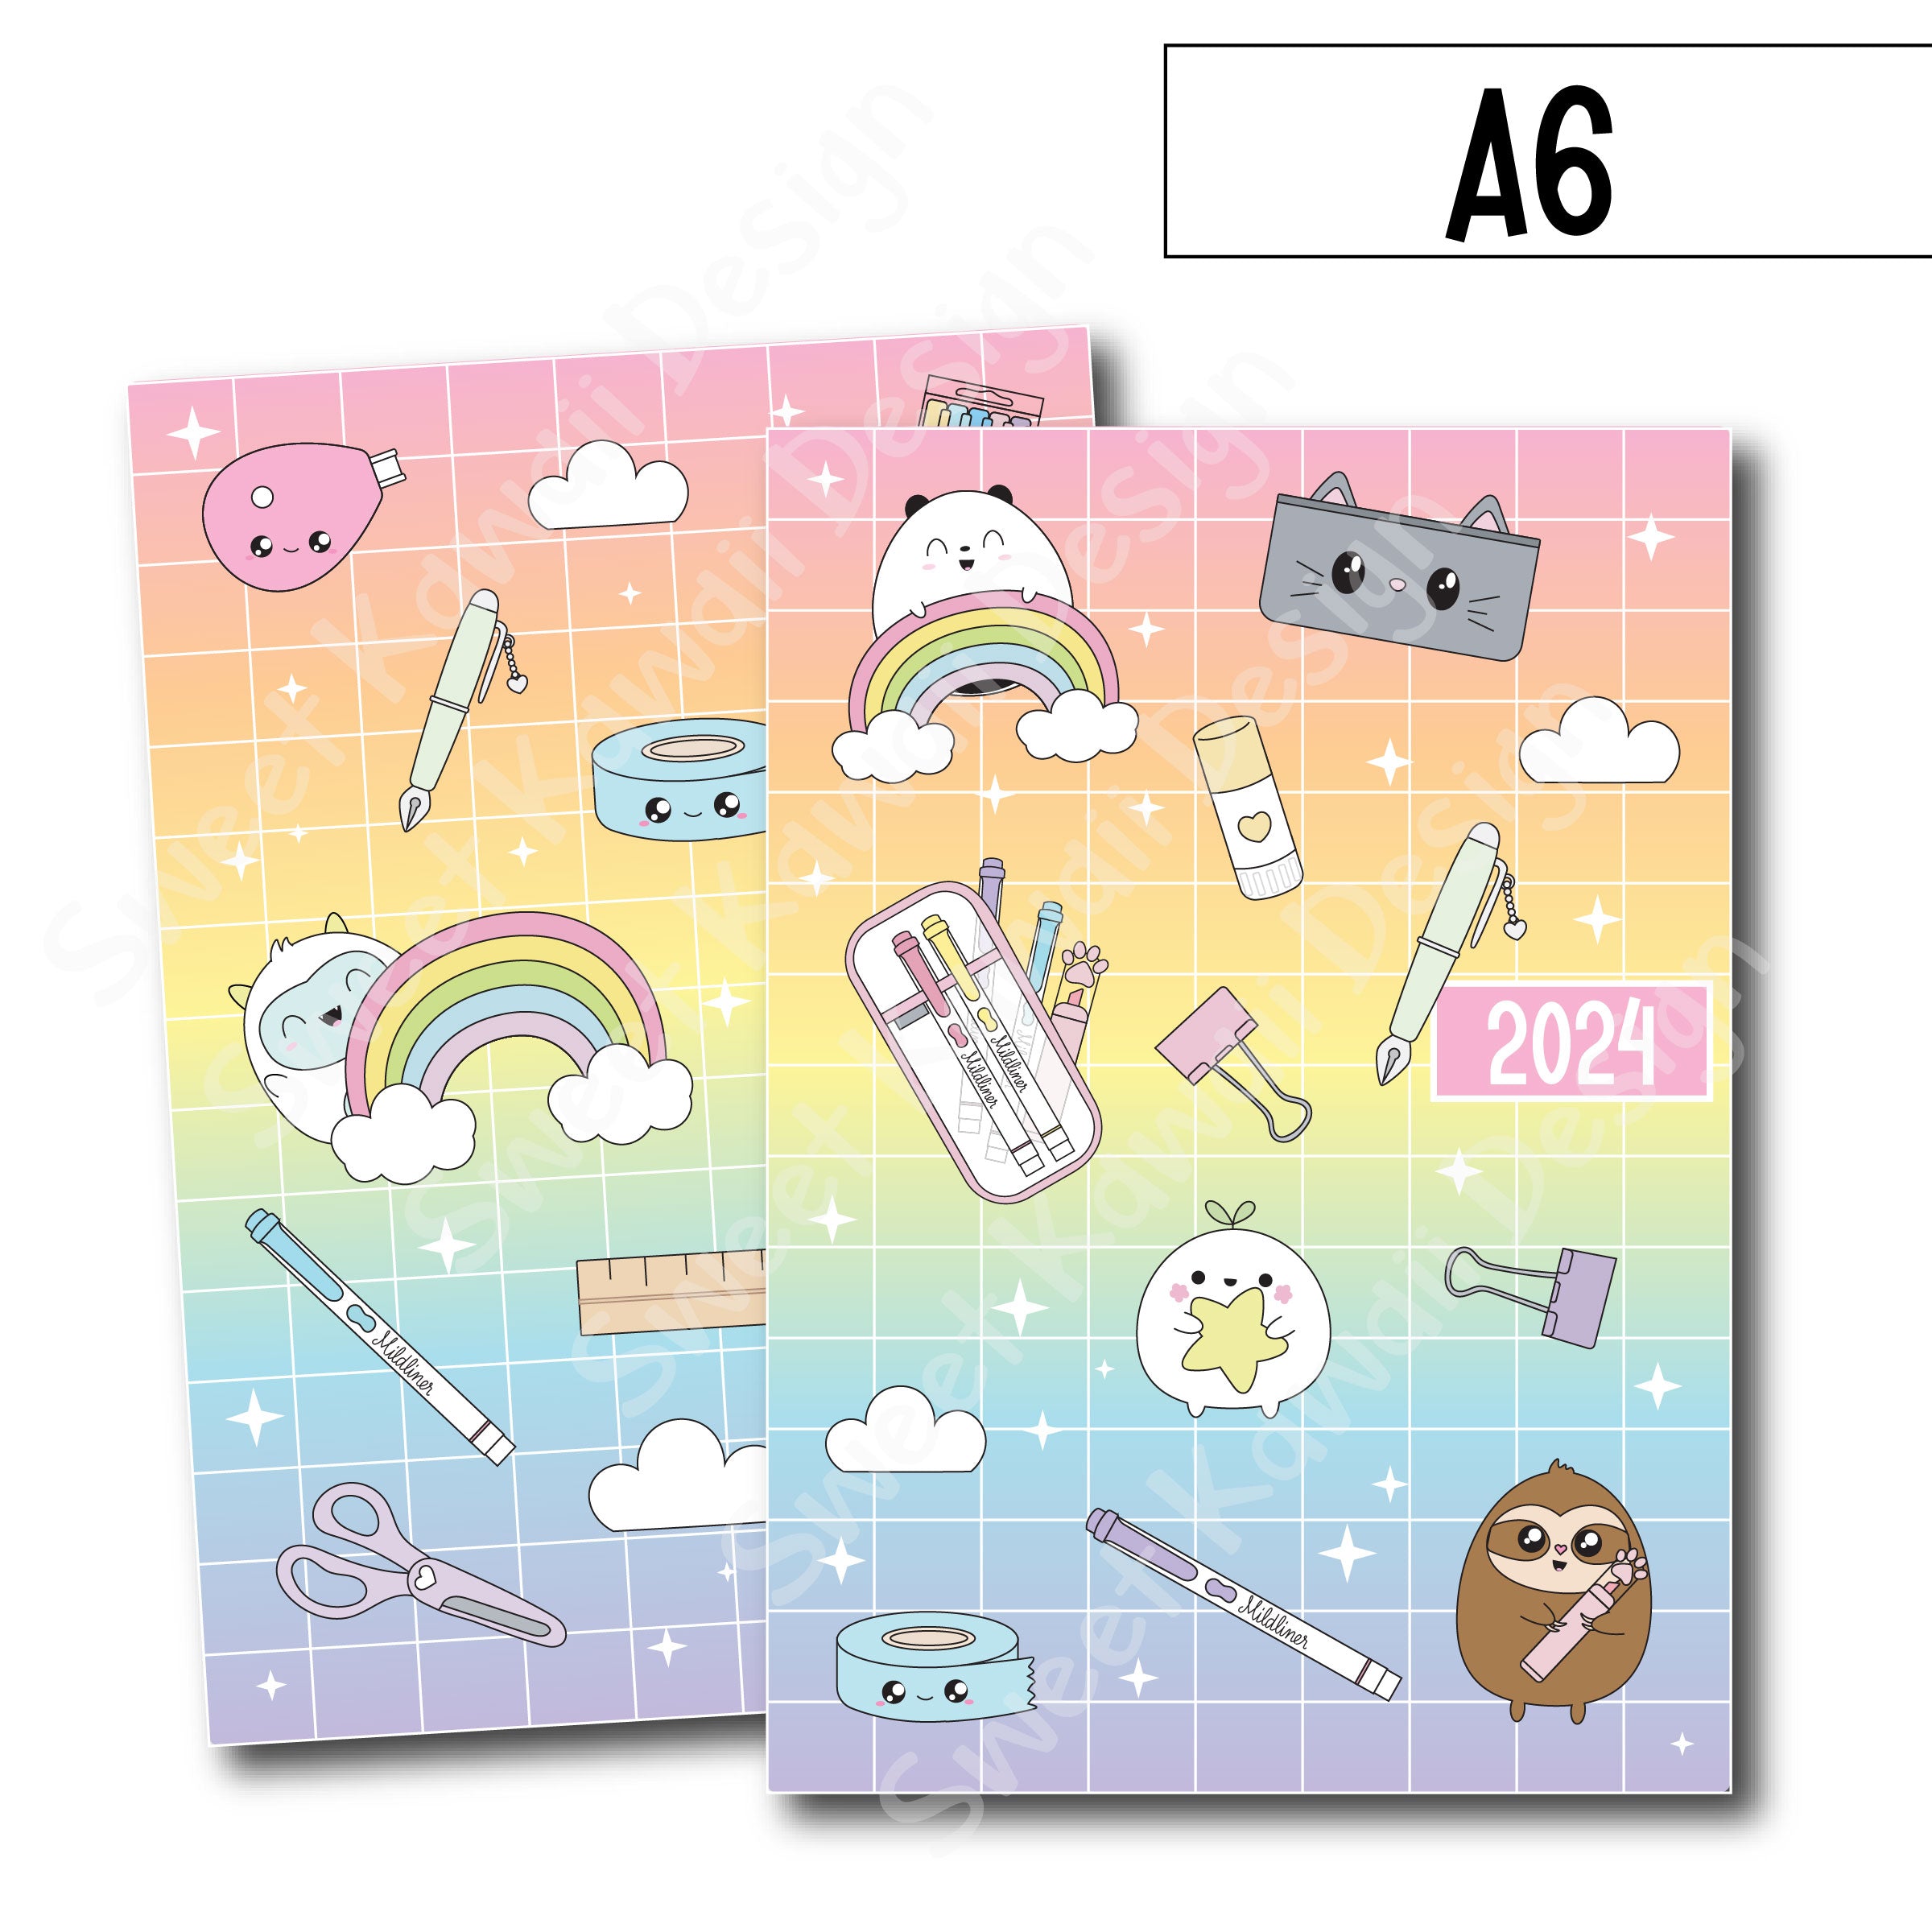 Hobonichi Cover Sticker - Pastel Gradient - Cousin or A6